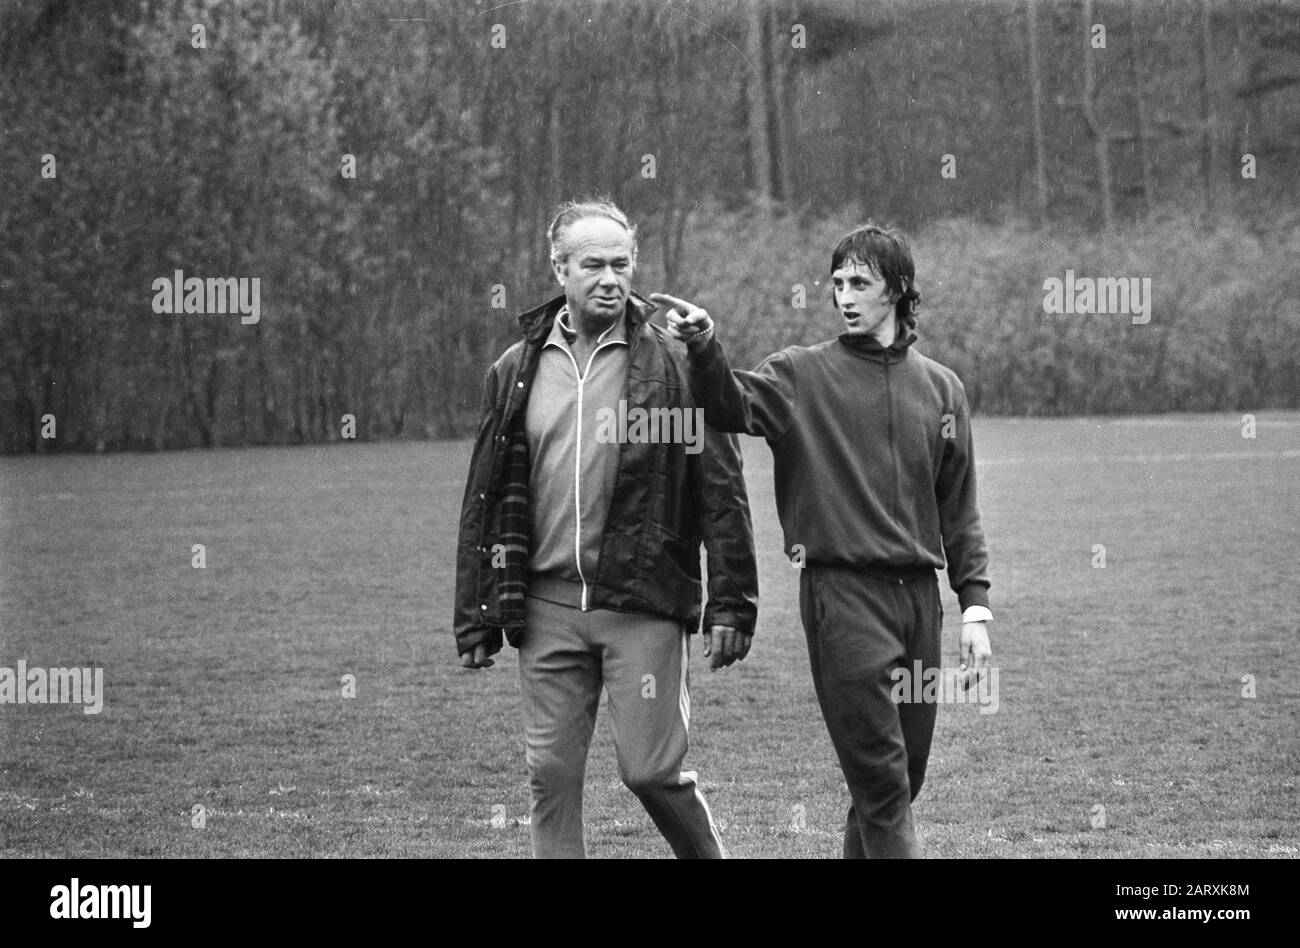 Training Dutch national team, Fadrhonc and Cruijff Date: May 1, 1973 Keywords: sport, training, football Personal name: Cruijff, Johan, Fadrhonc, Frantiques Stock Photo